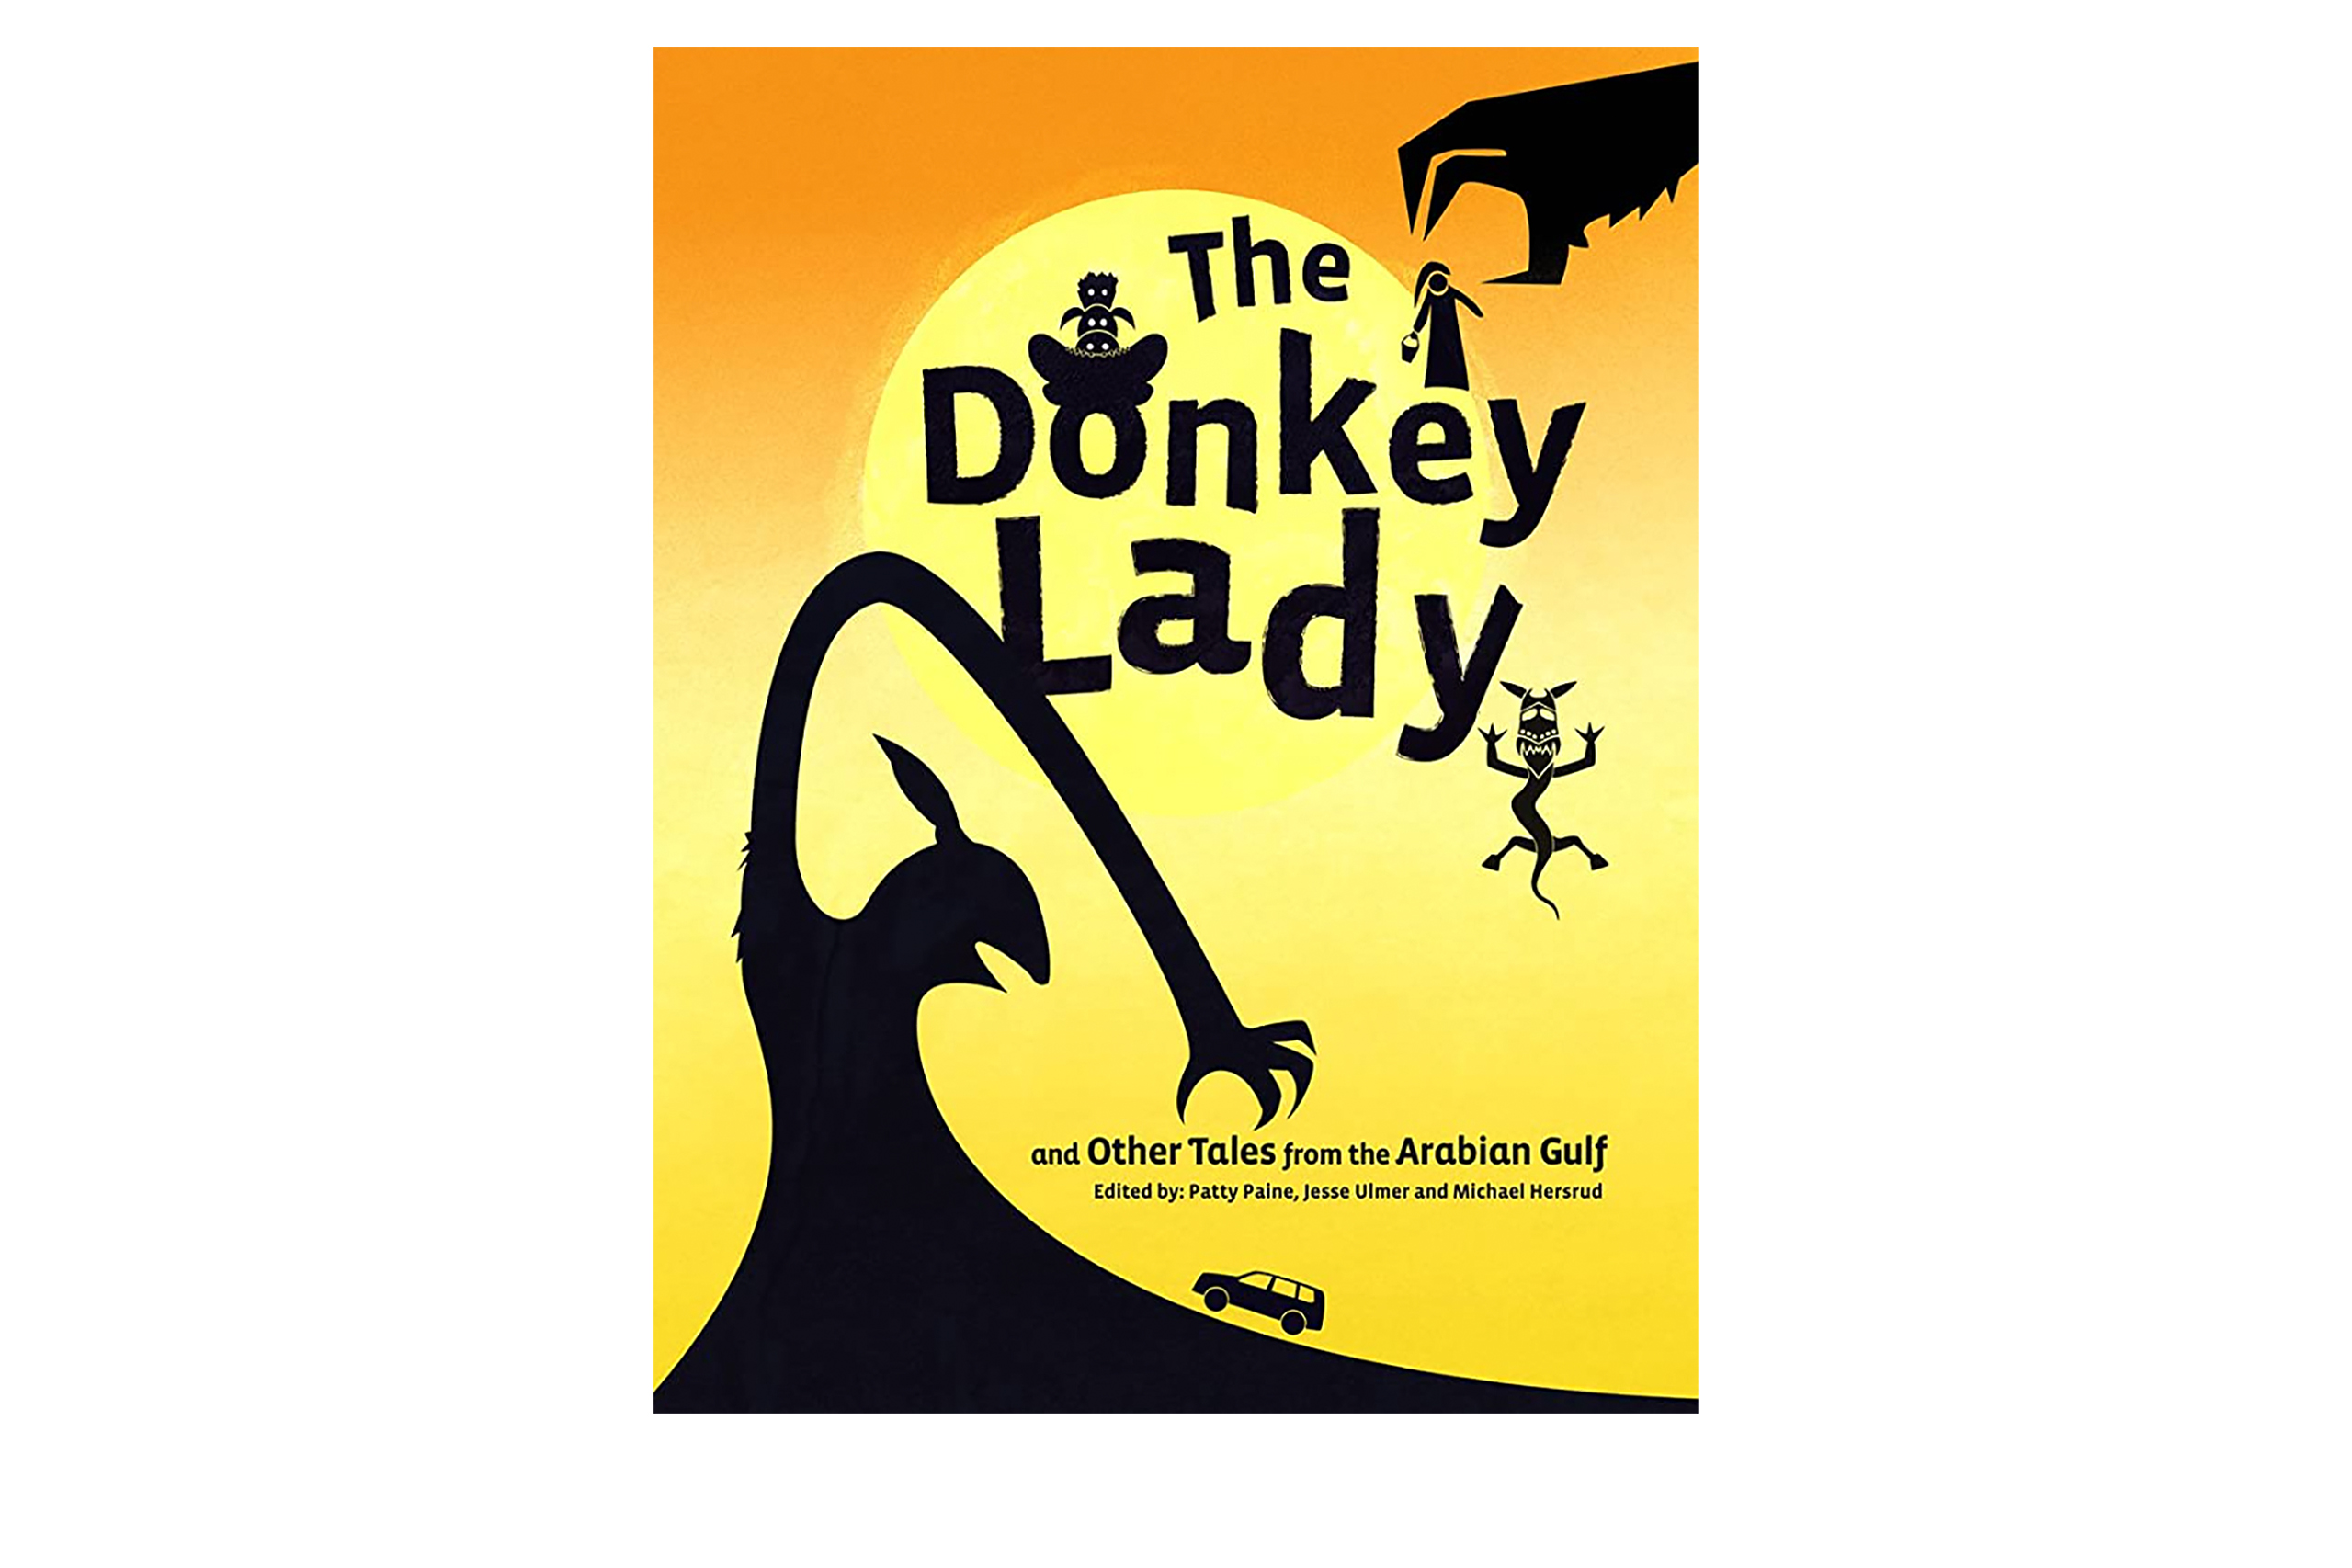 Donkey Lady Book